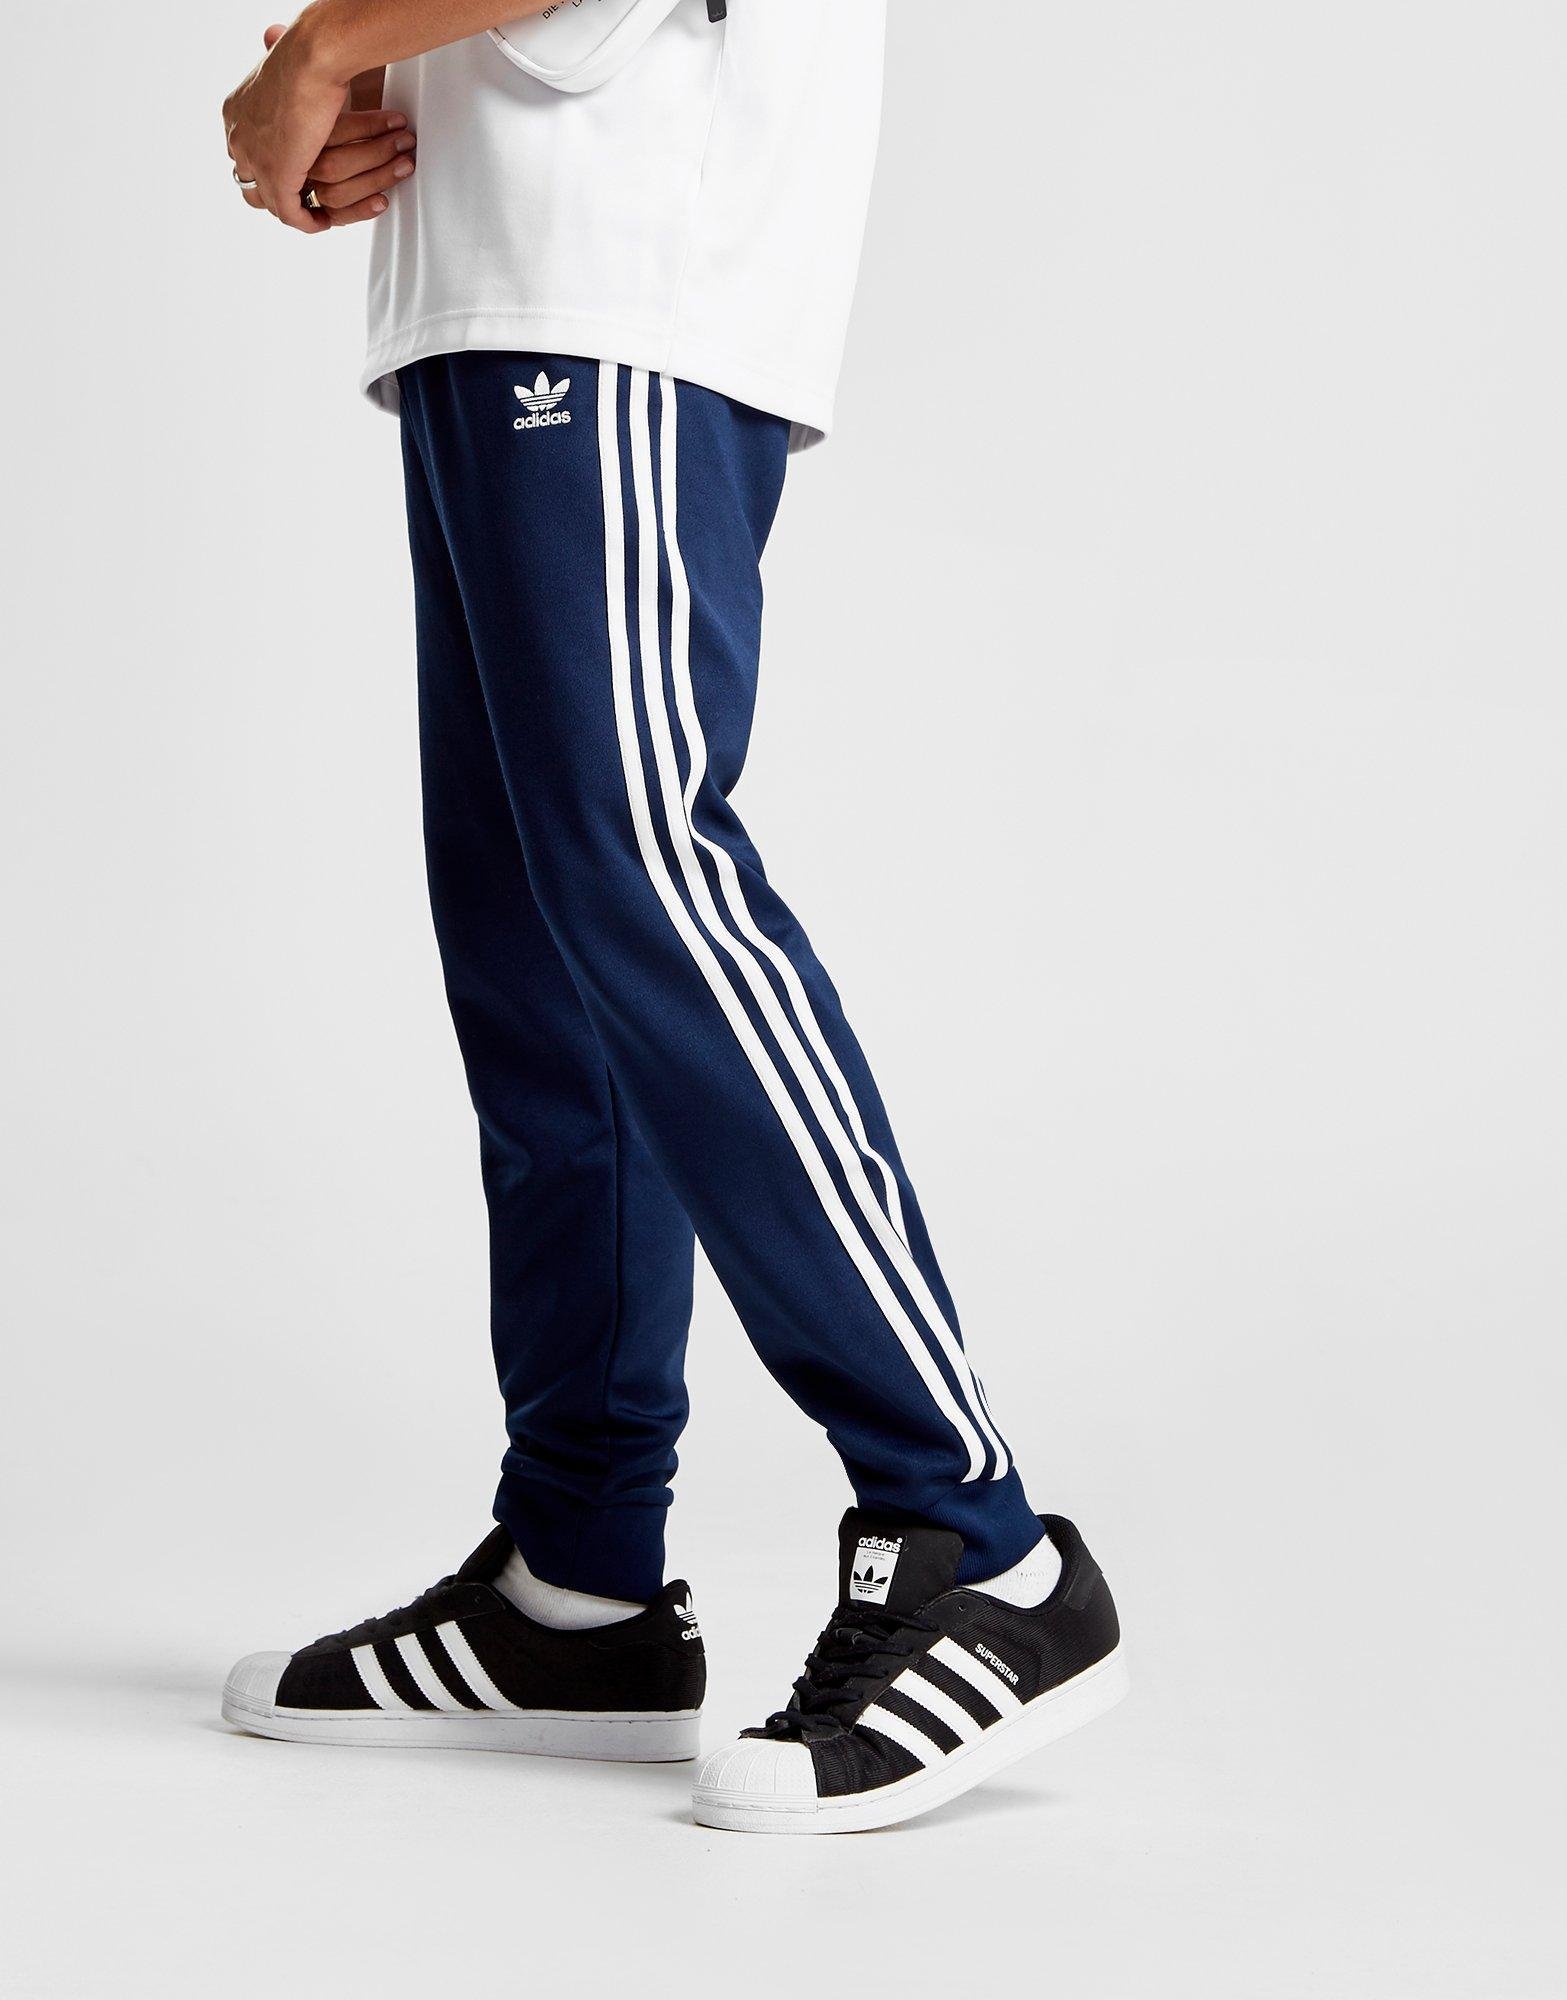 Adidas Superstar Track Pants Navy Hotsell, SAVE 35% - mpgc.net